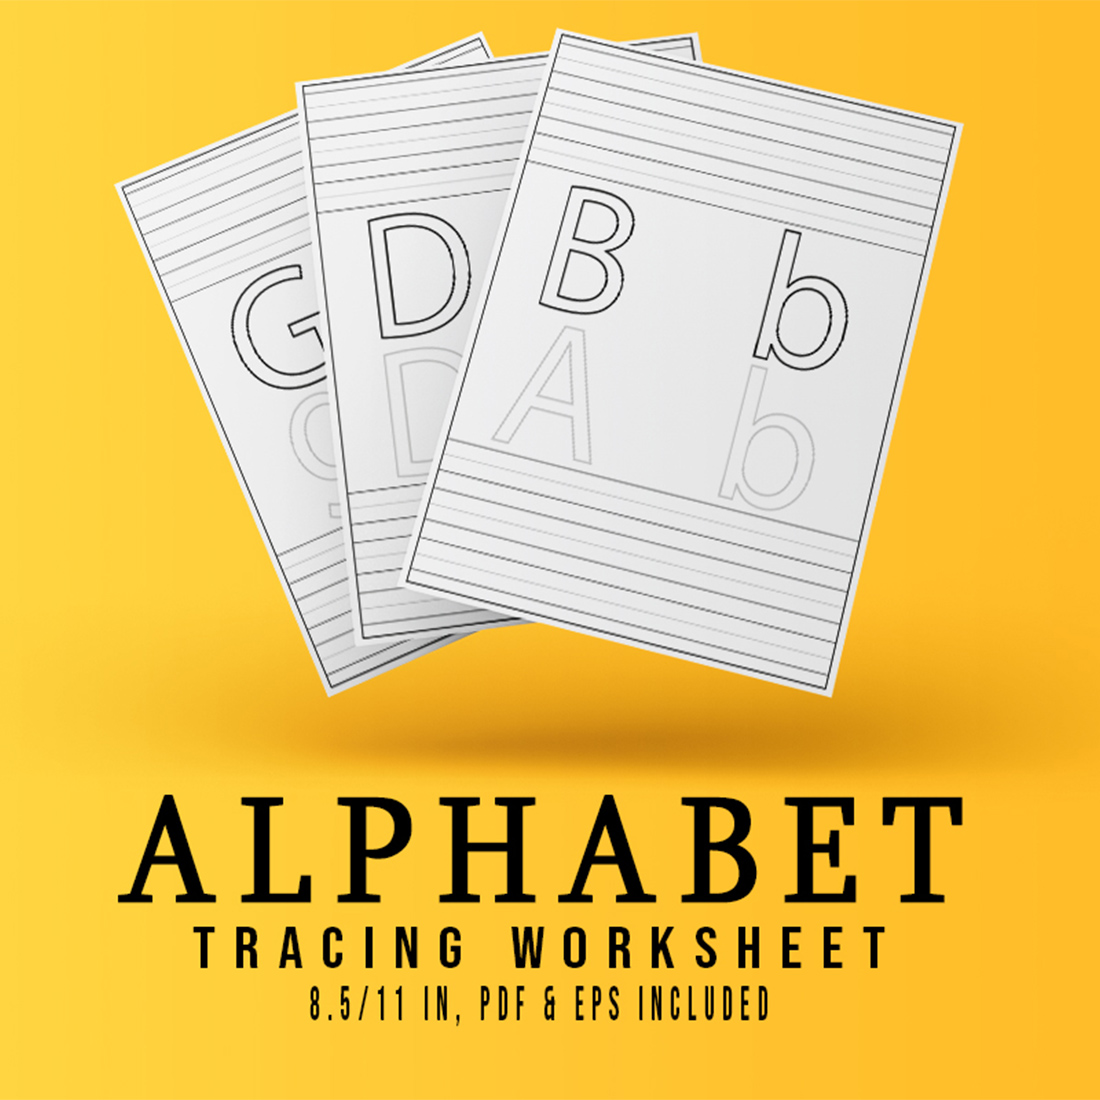 A to Z Alphabets Words Tracing Worksheets Bundle V.1 cover image.